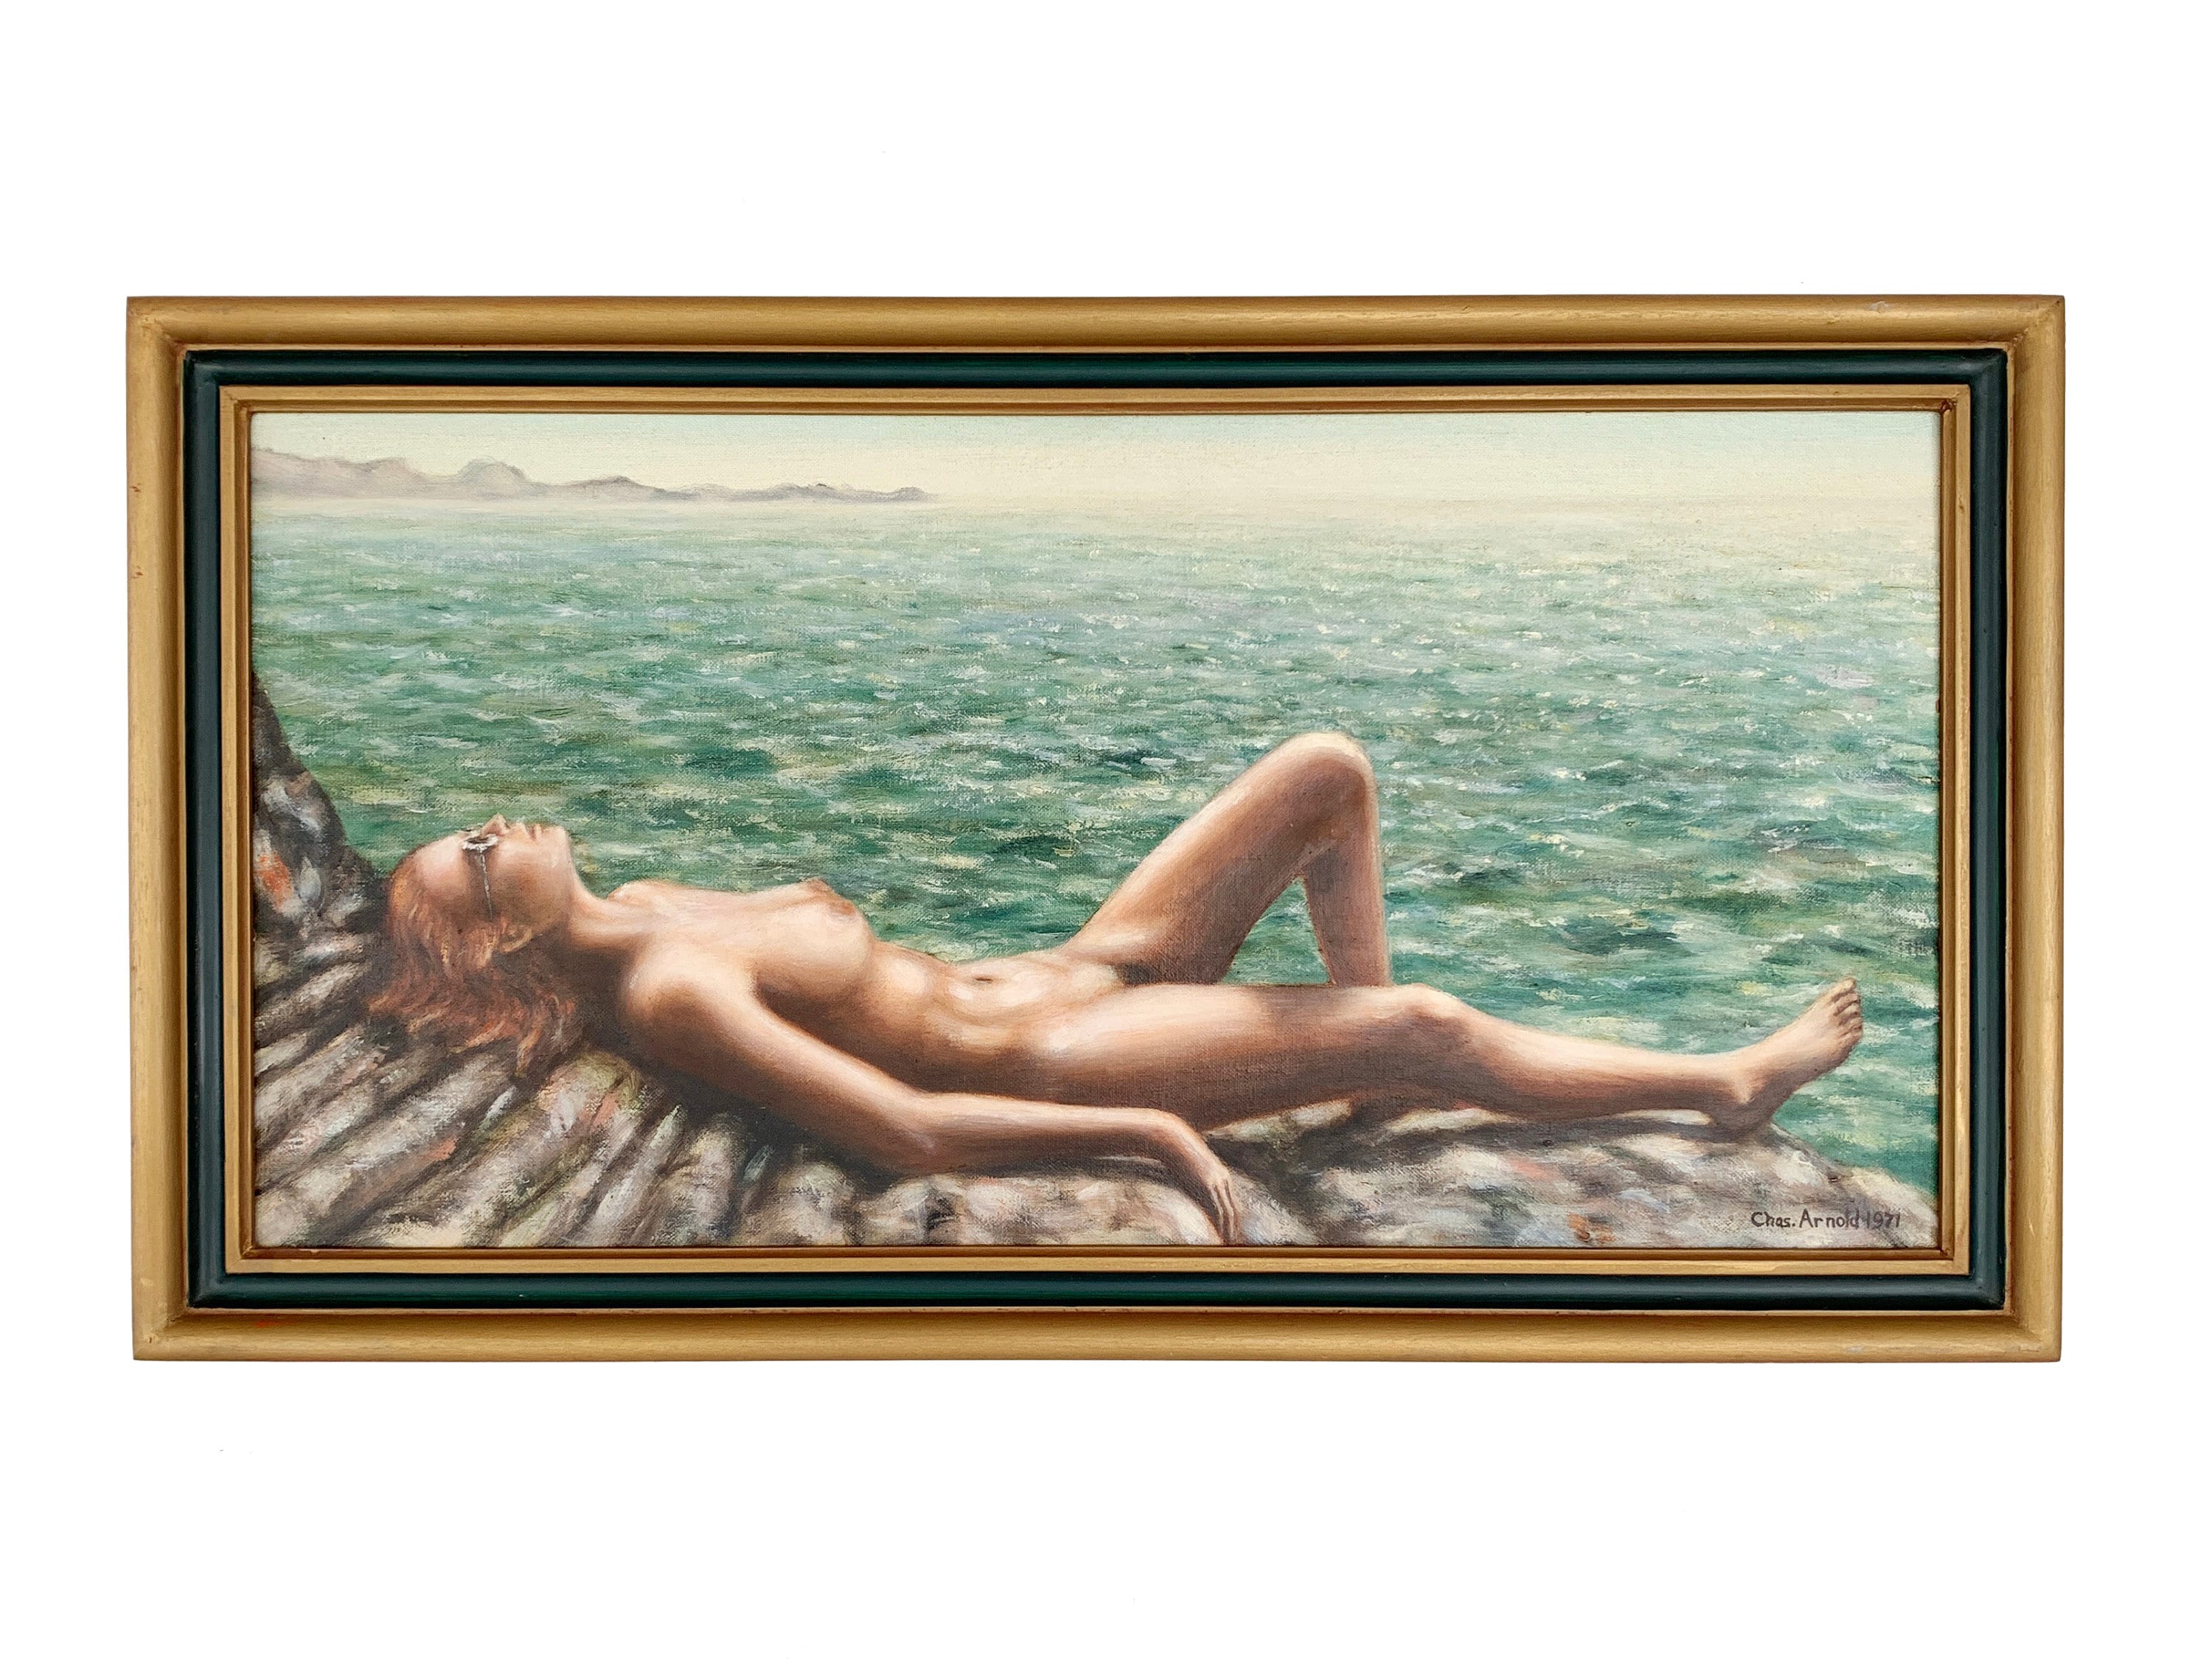 Vintage 1970s Nude Portrait of a Woman Sunbathing Ocean pic